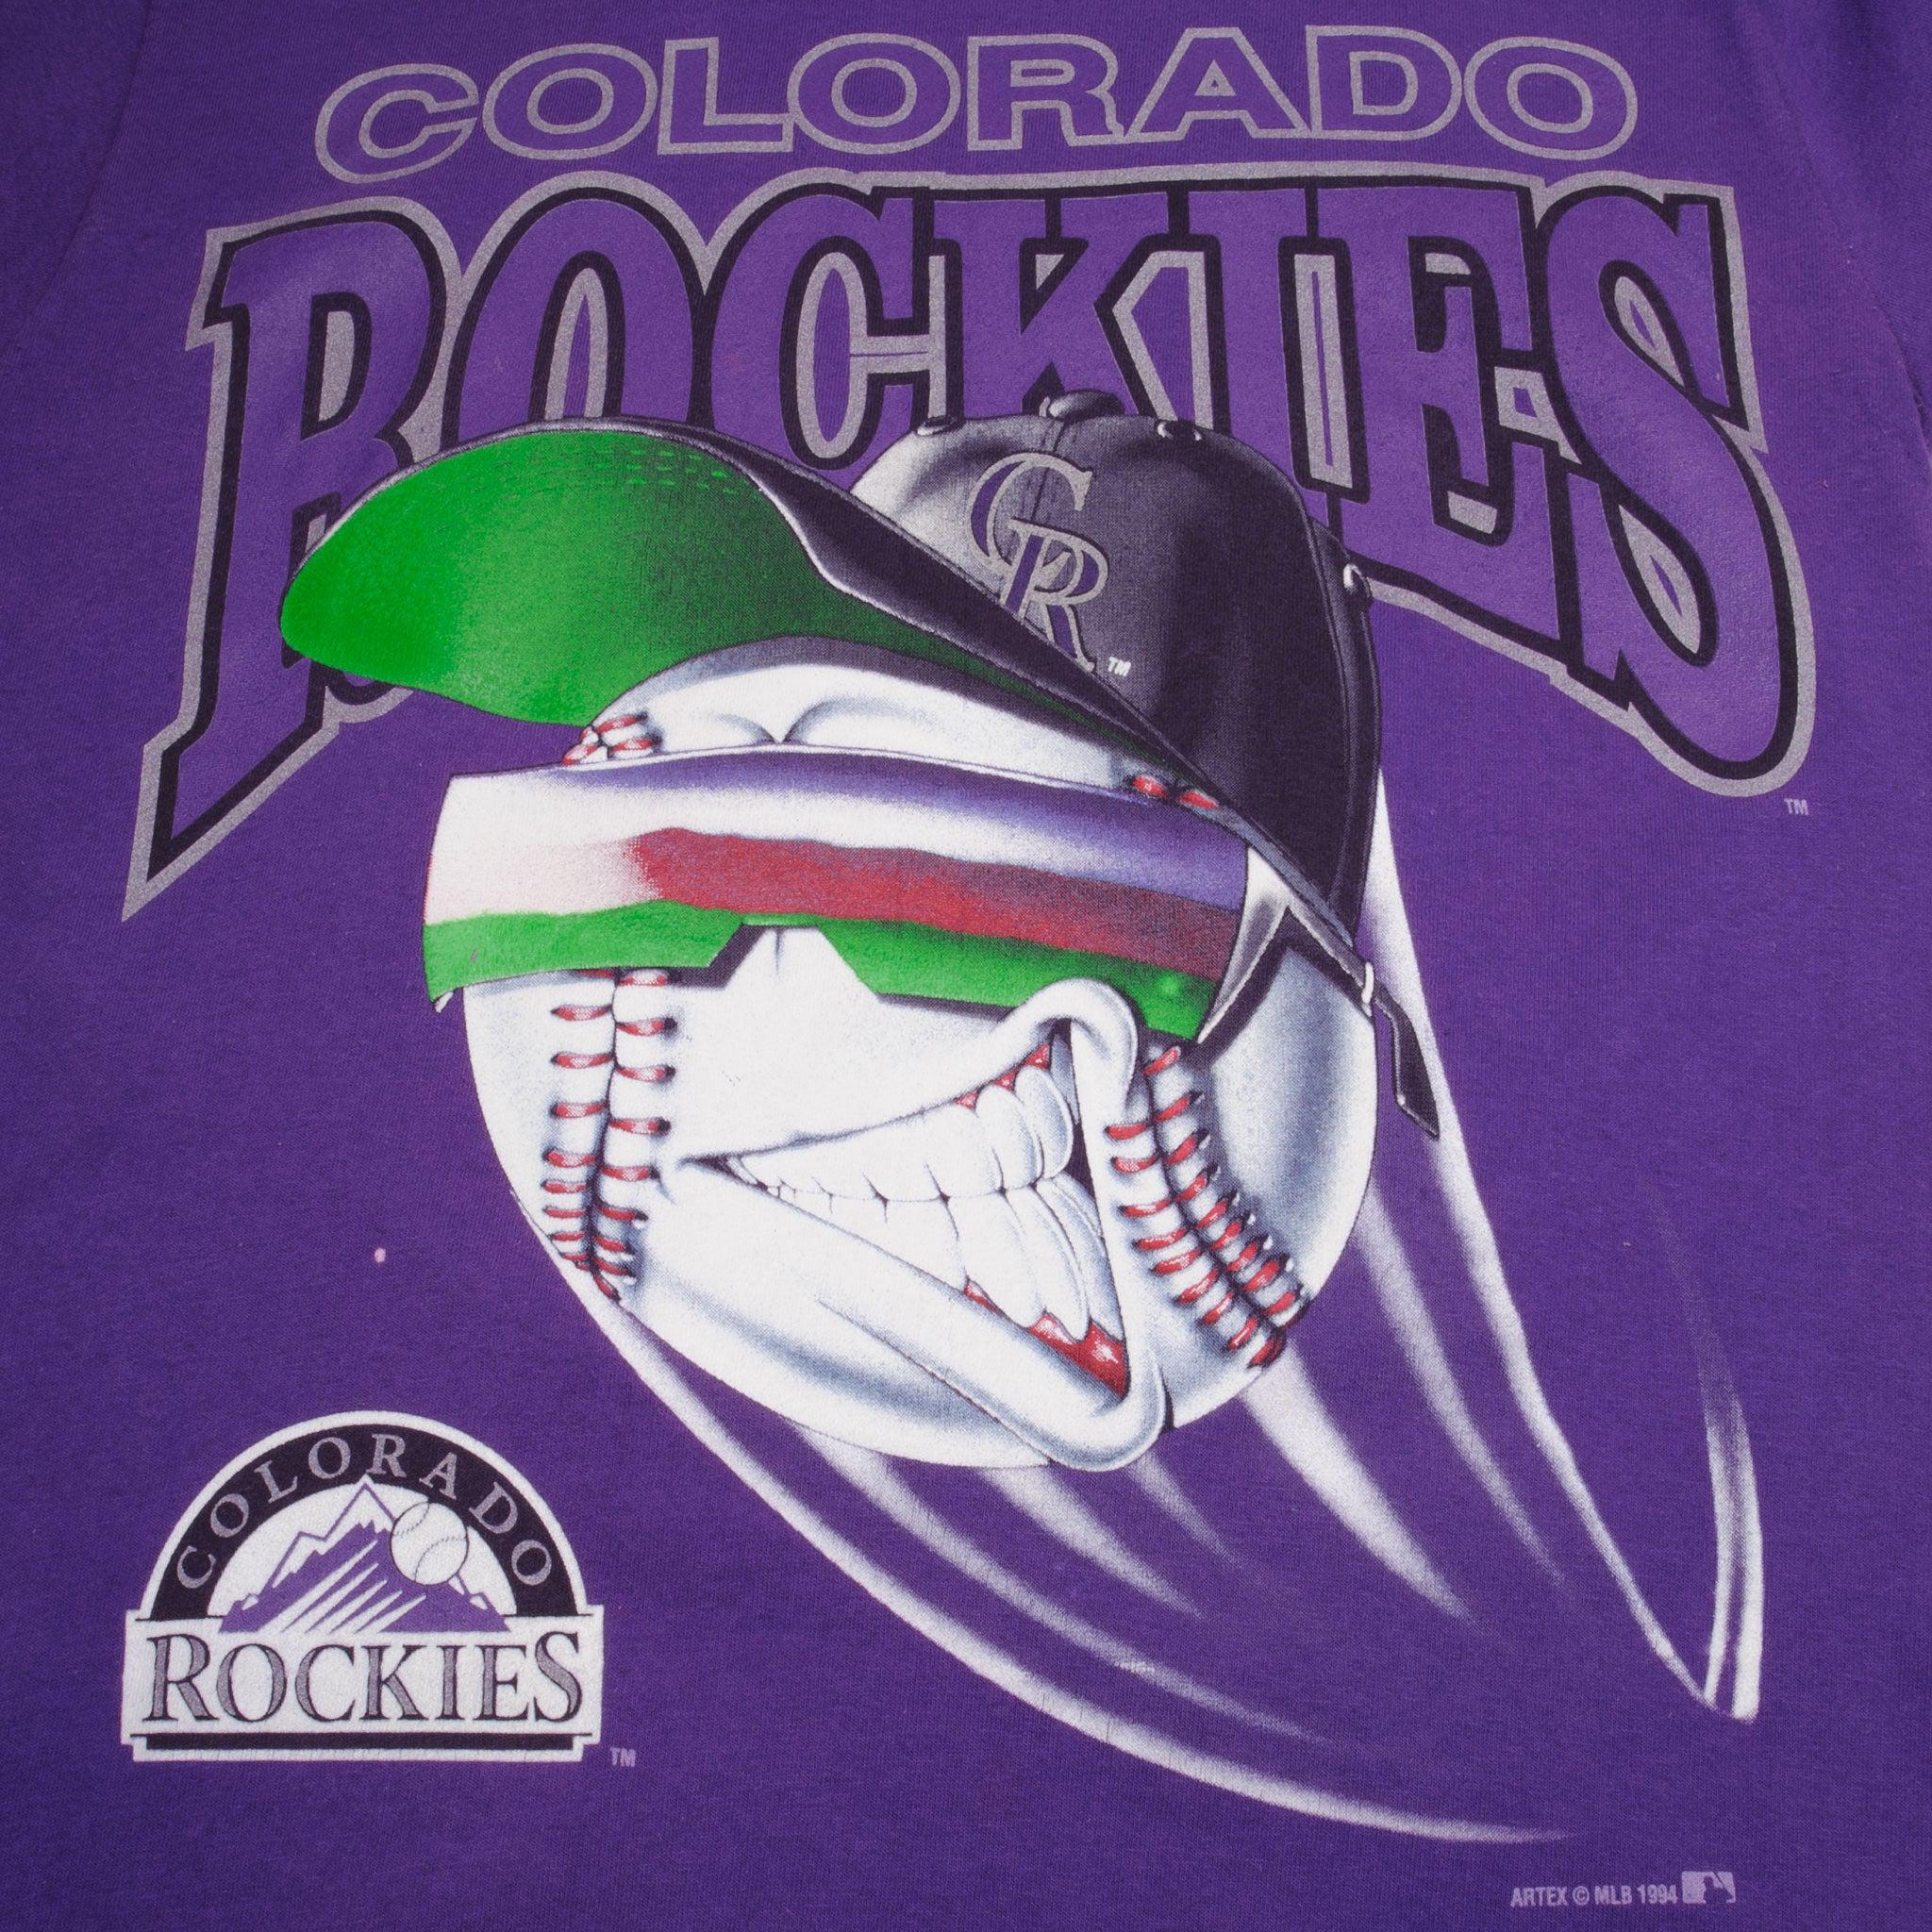 Vintage MLB Colorado Rockies Tee Shirt 1994 Size Medium Made in USA